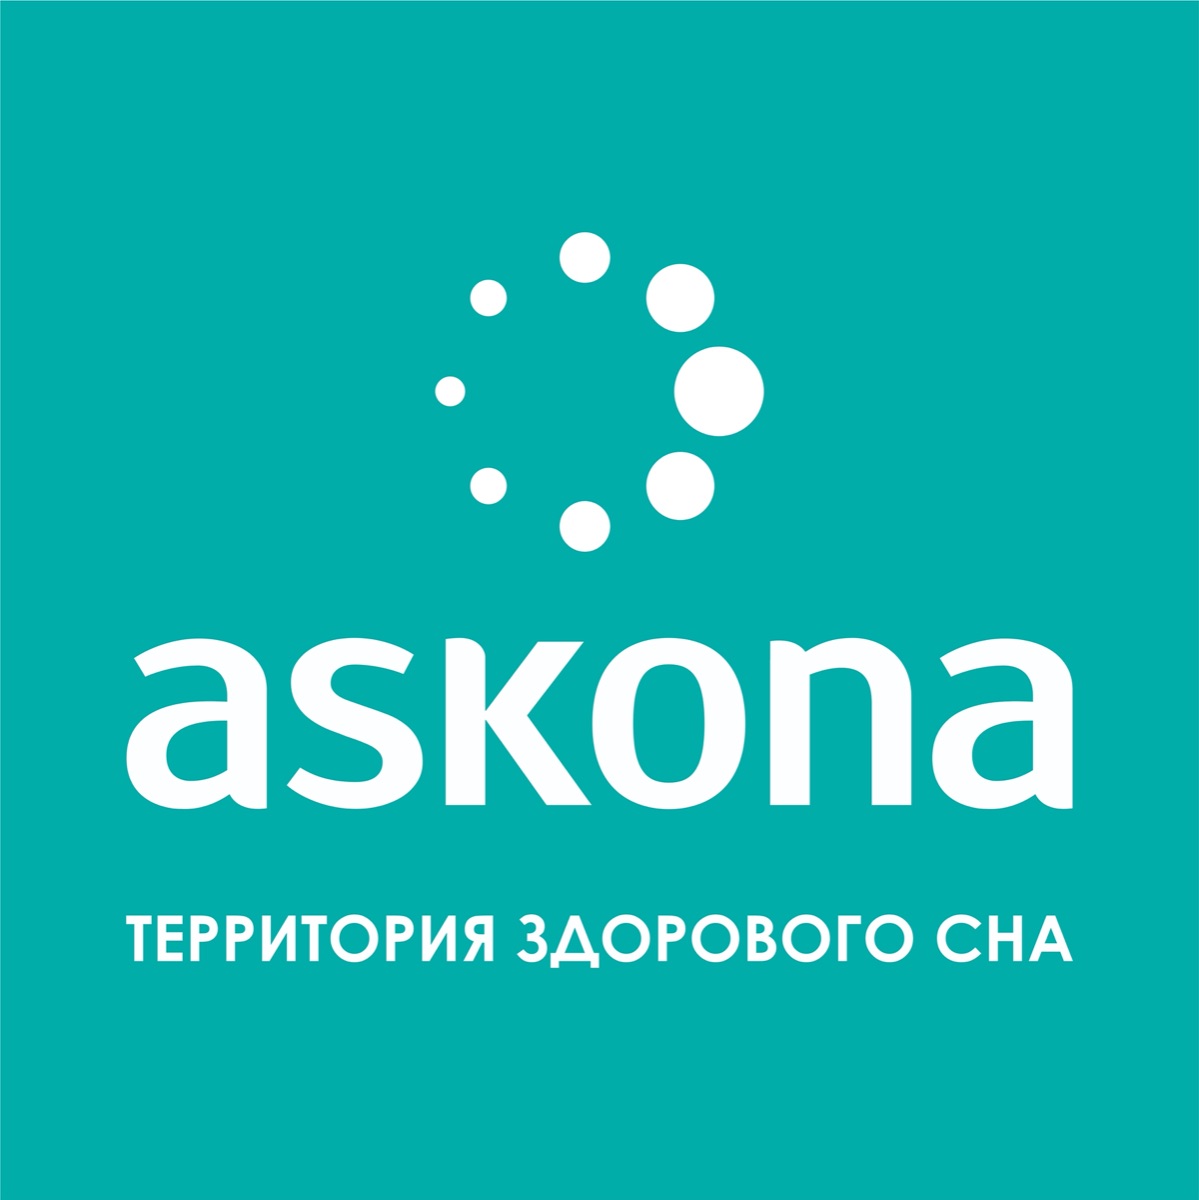 askona logo